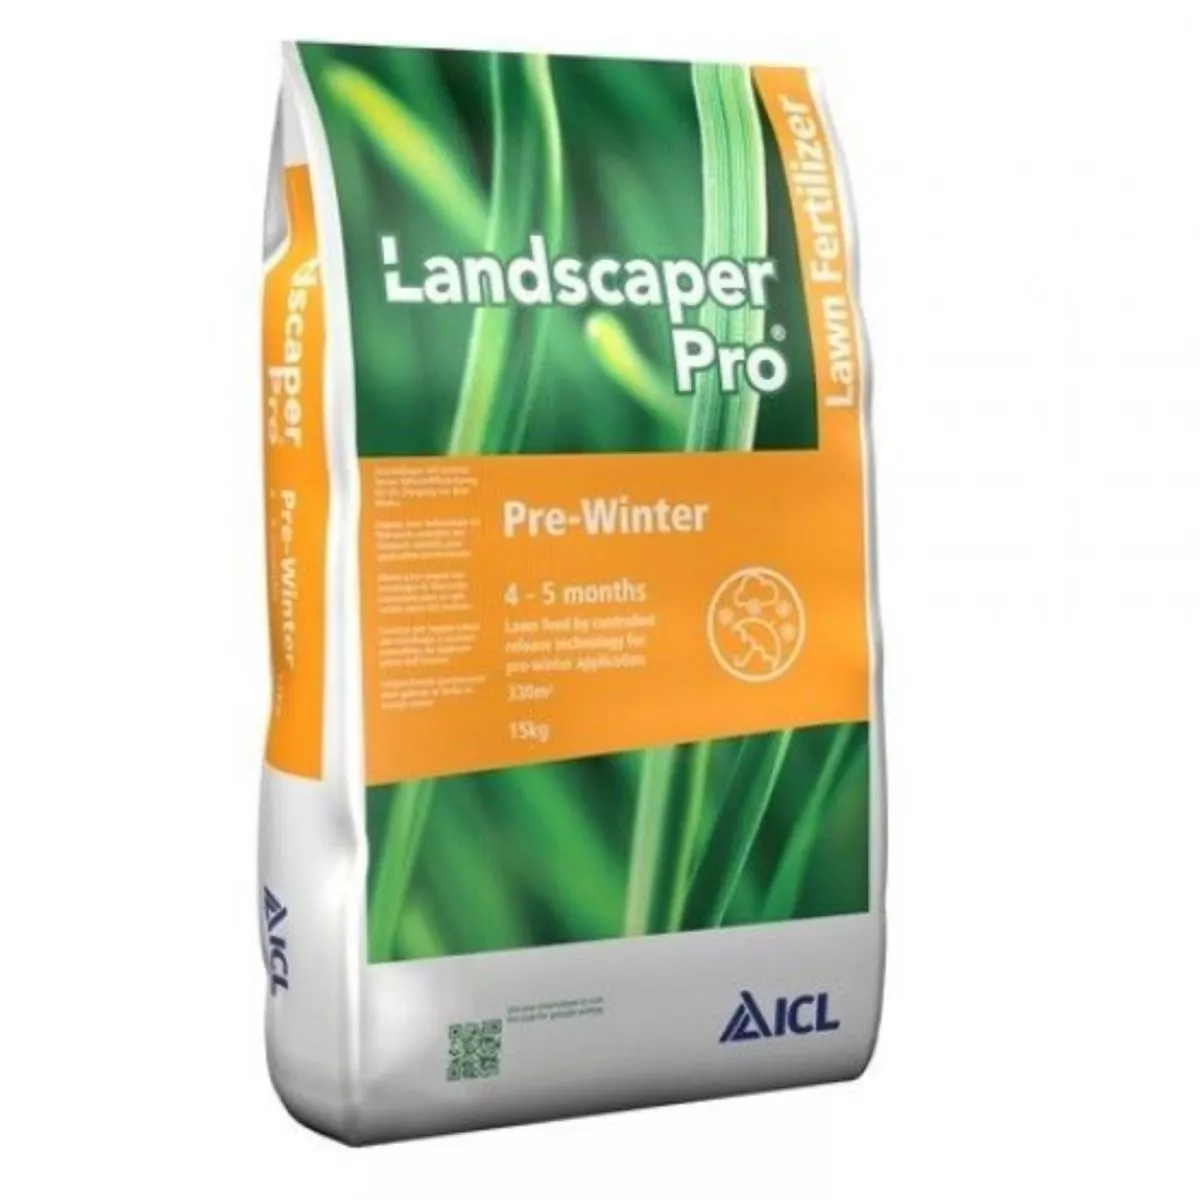 Ingrasamant Landscaper Pro PRE WINTER 4-5 luni 14+05+21+2MgO ICL Specialty Fertilizers (Everris International) 5 kg 1